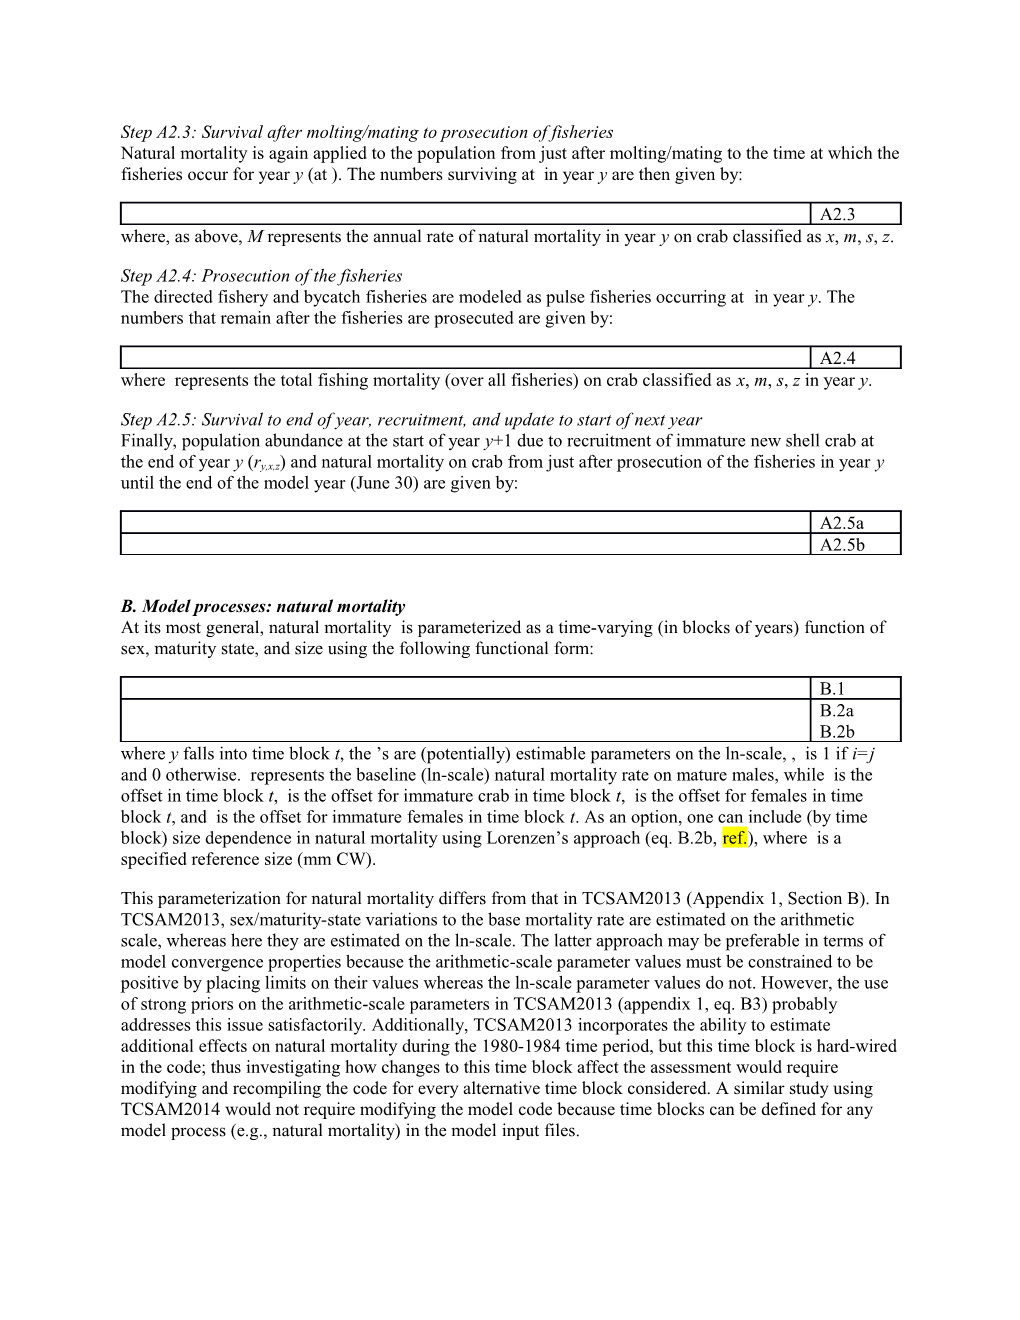 Appendix 3: TCSAM (Tanner Crab Stock Assessment Model) 2014 Description